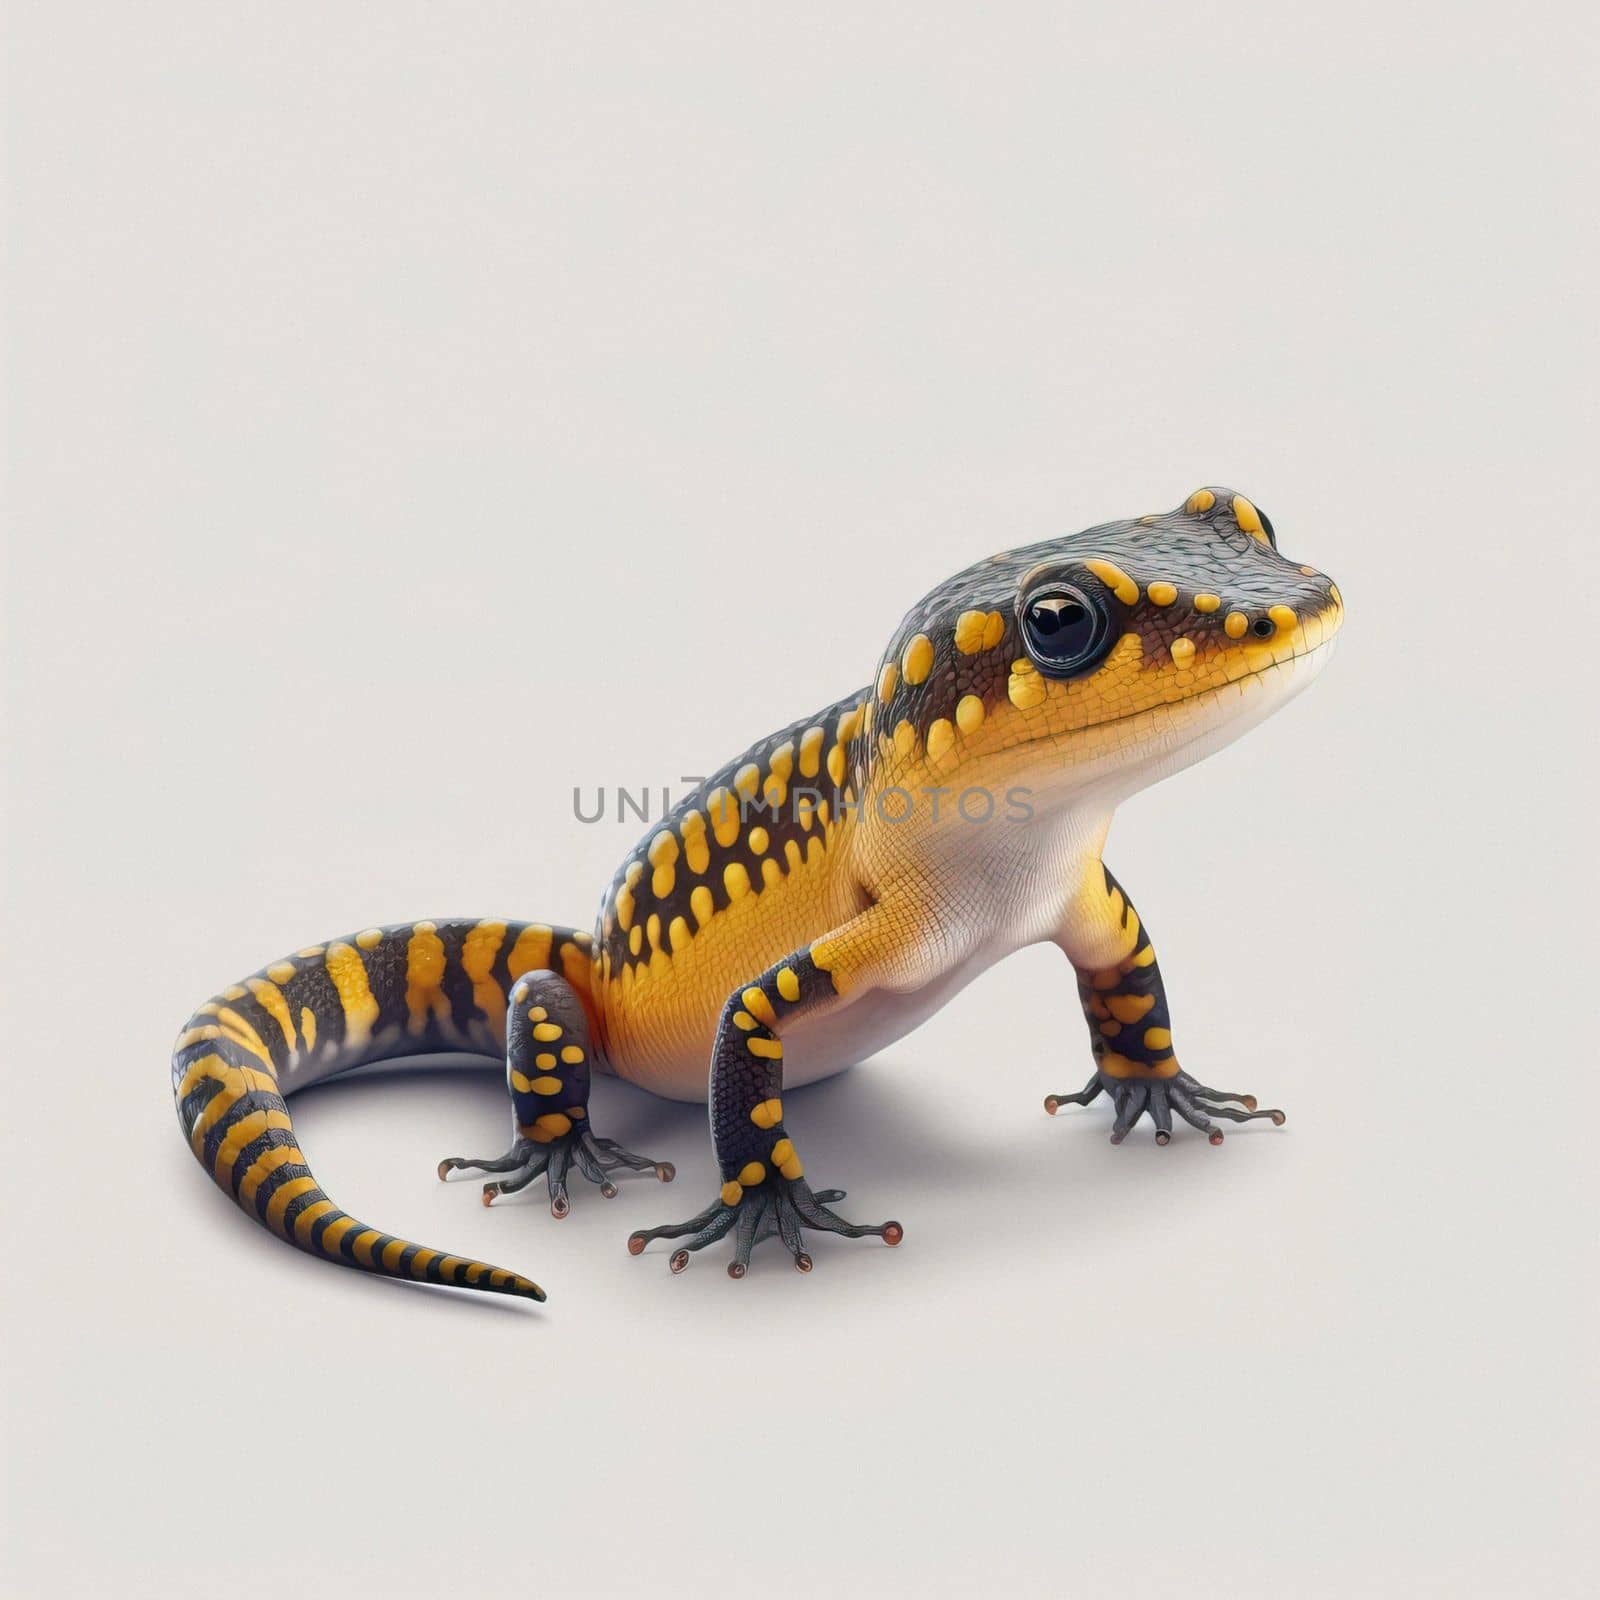 3d Europaean salamander (Salamandra salamandra) on white background. Download image